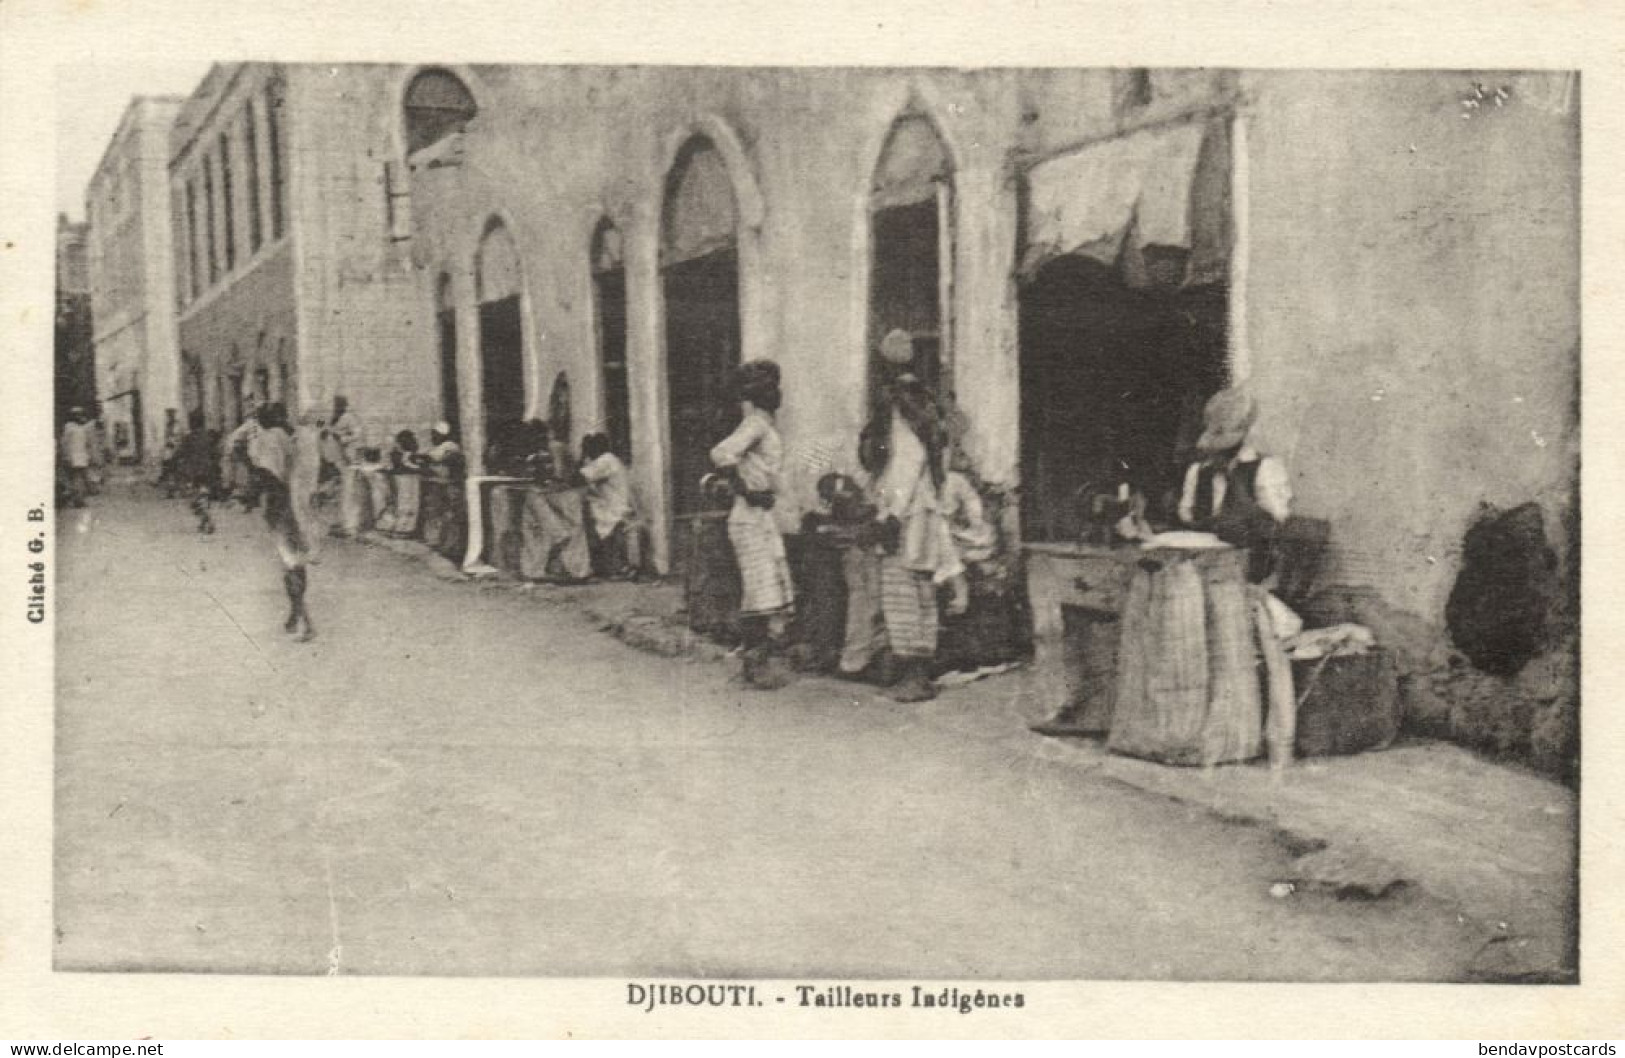 Djibouti, DJIBOUTI, Tailleurs Indigènes, Indigenous Tailors (1920s) Postcard - Djibouti